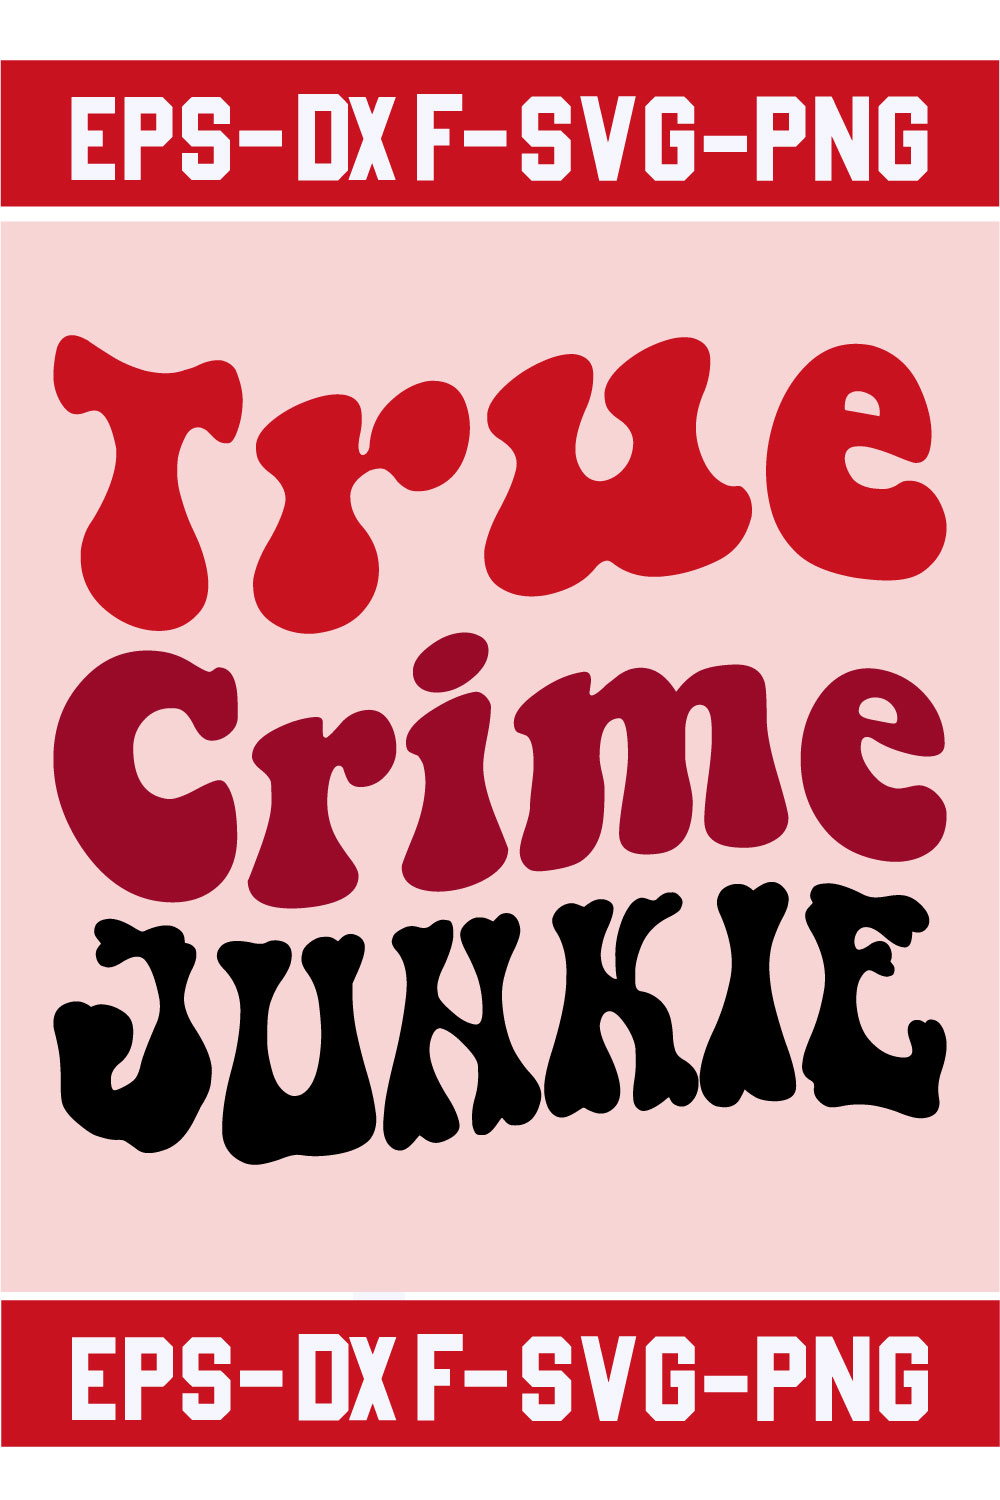 True Crime Junkie pinterest preview image.